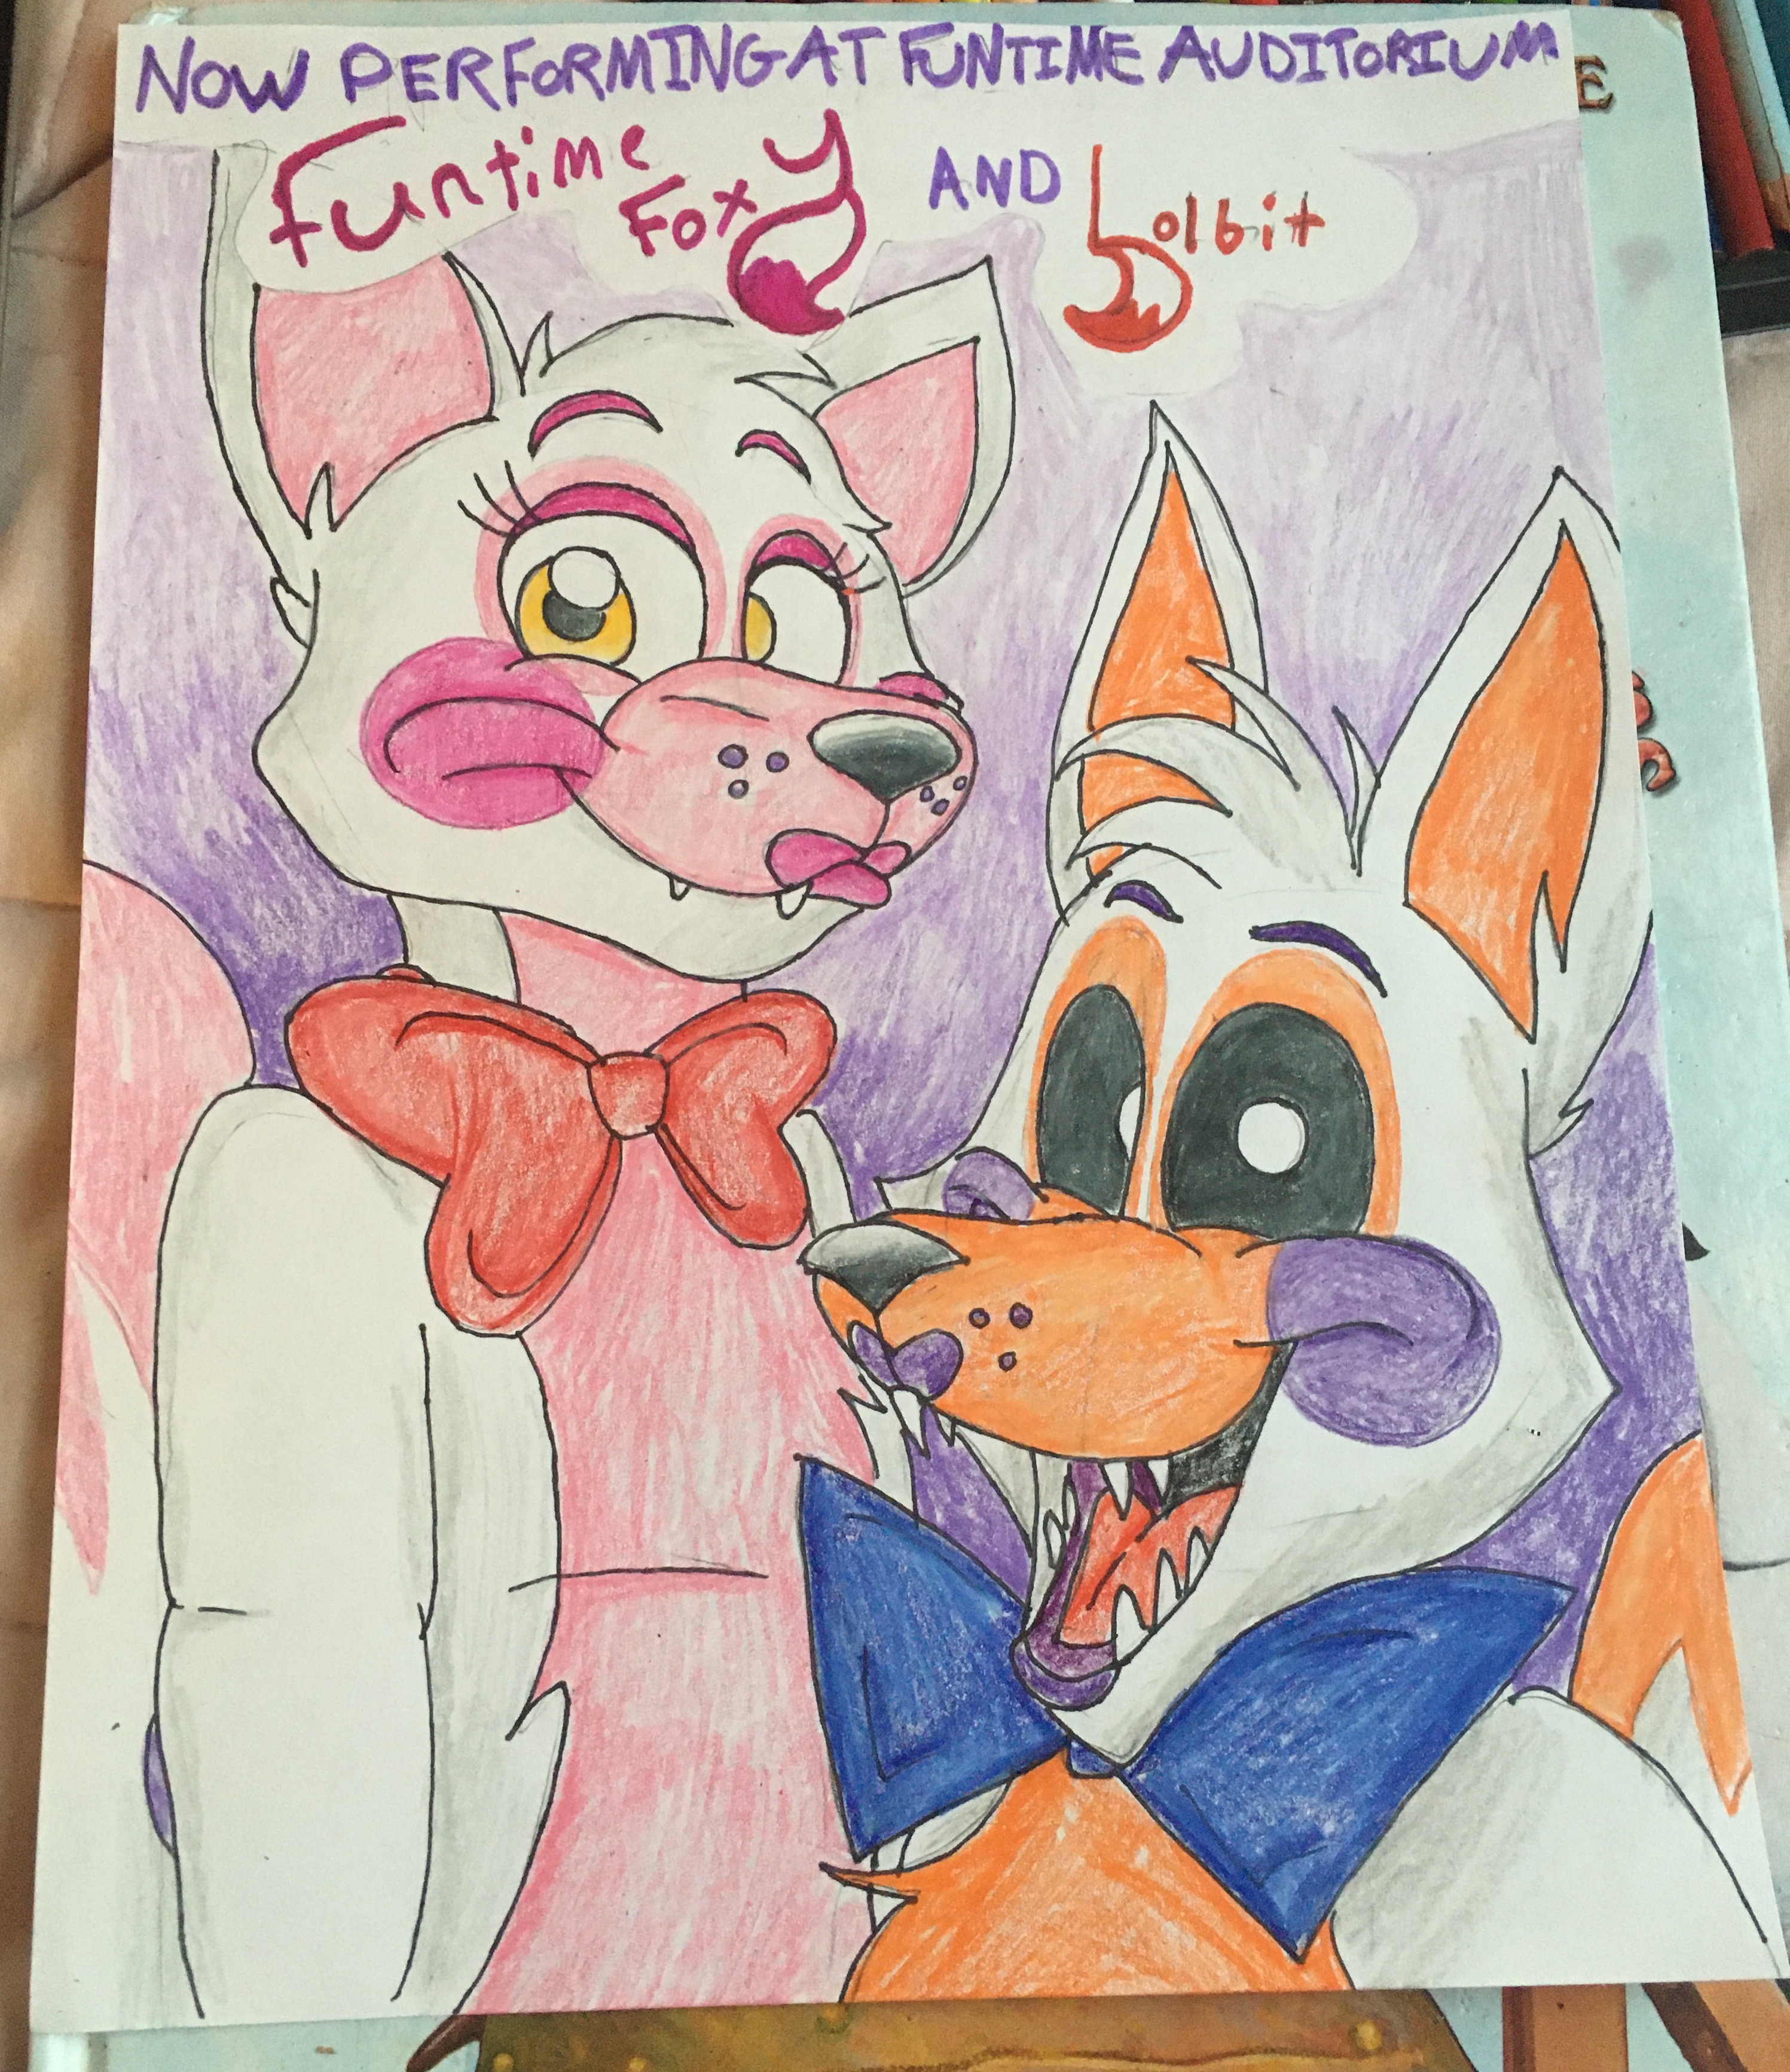 Funtime Foxy and Lolbit Fanart!! (By me)